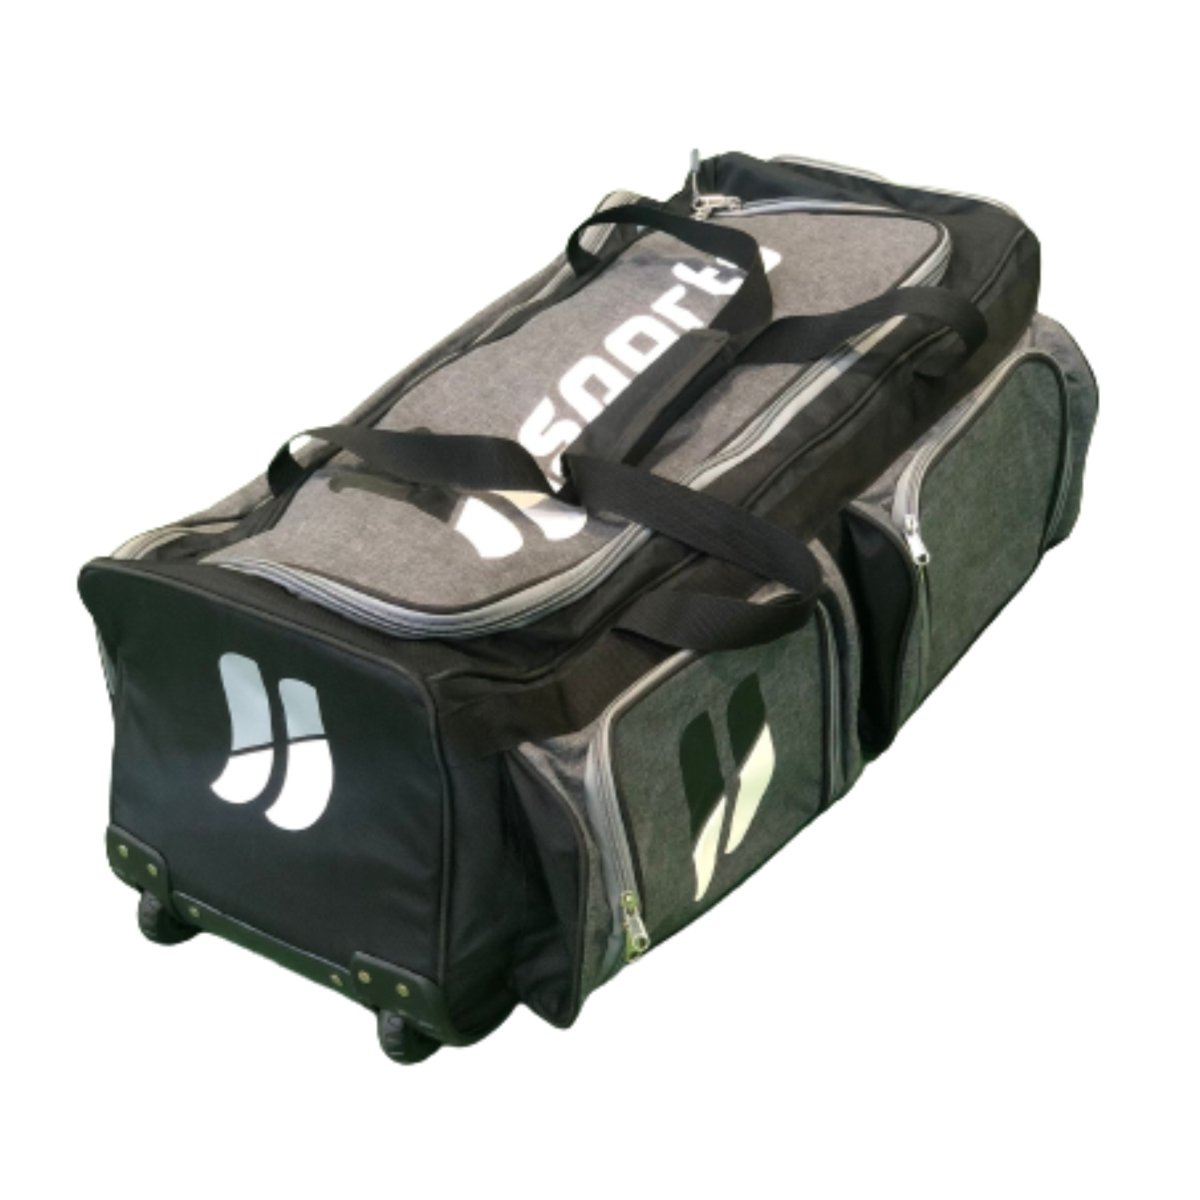 JJ Sports Celestial Pro 3.0 Cricket Kit Bag Wheelie - Acrux Sports